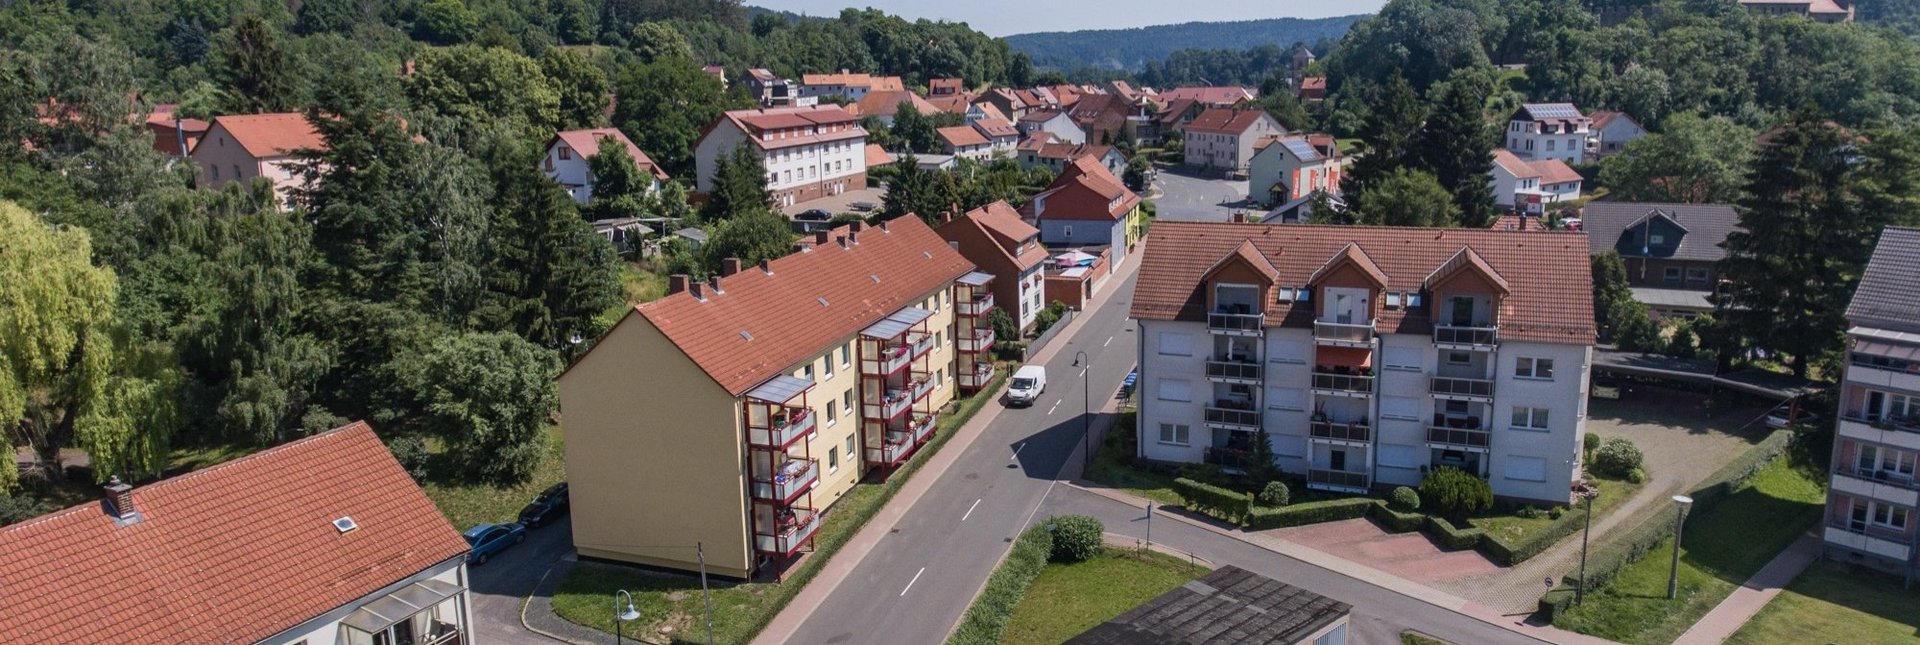 Wohngebiet Creuzburg